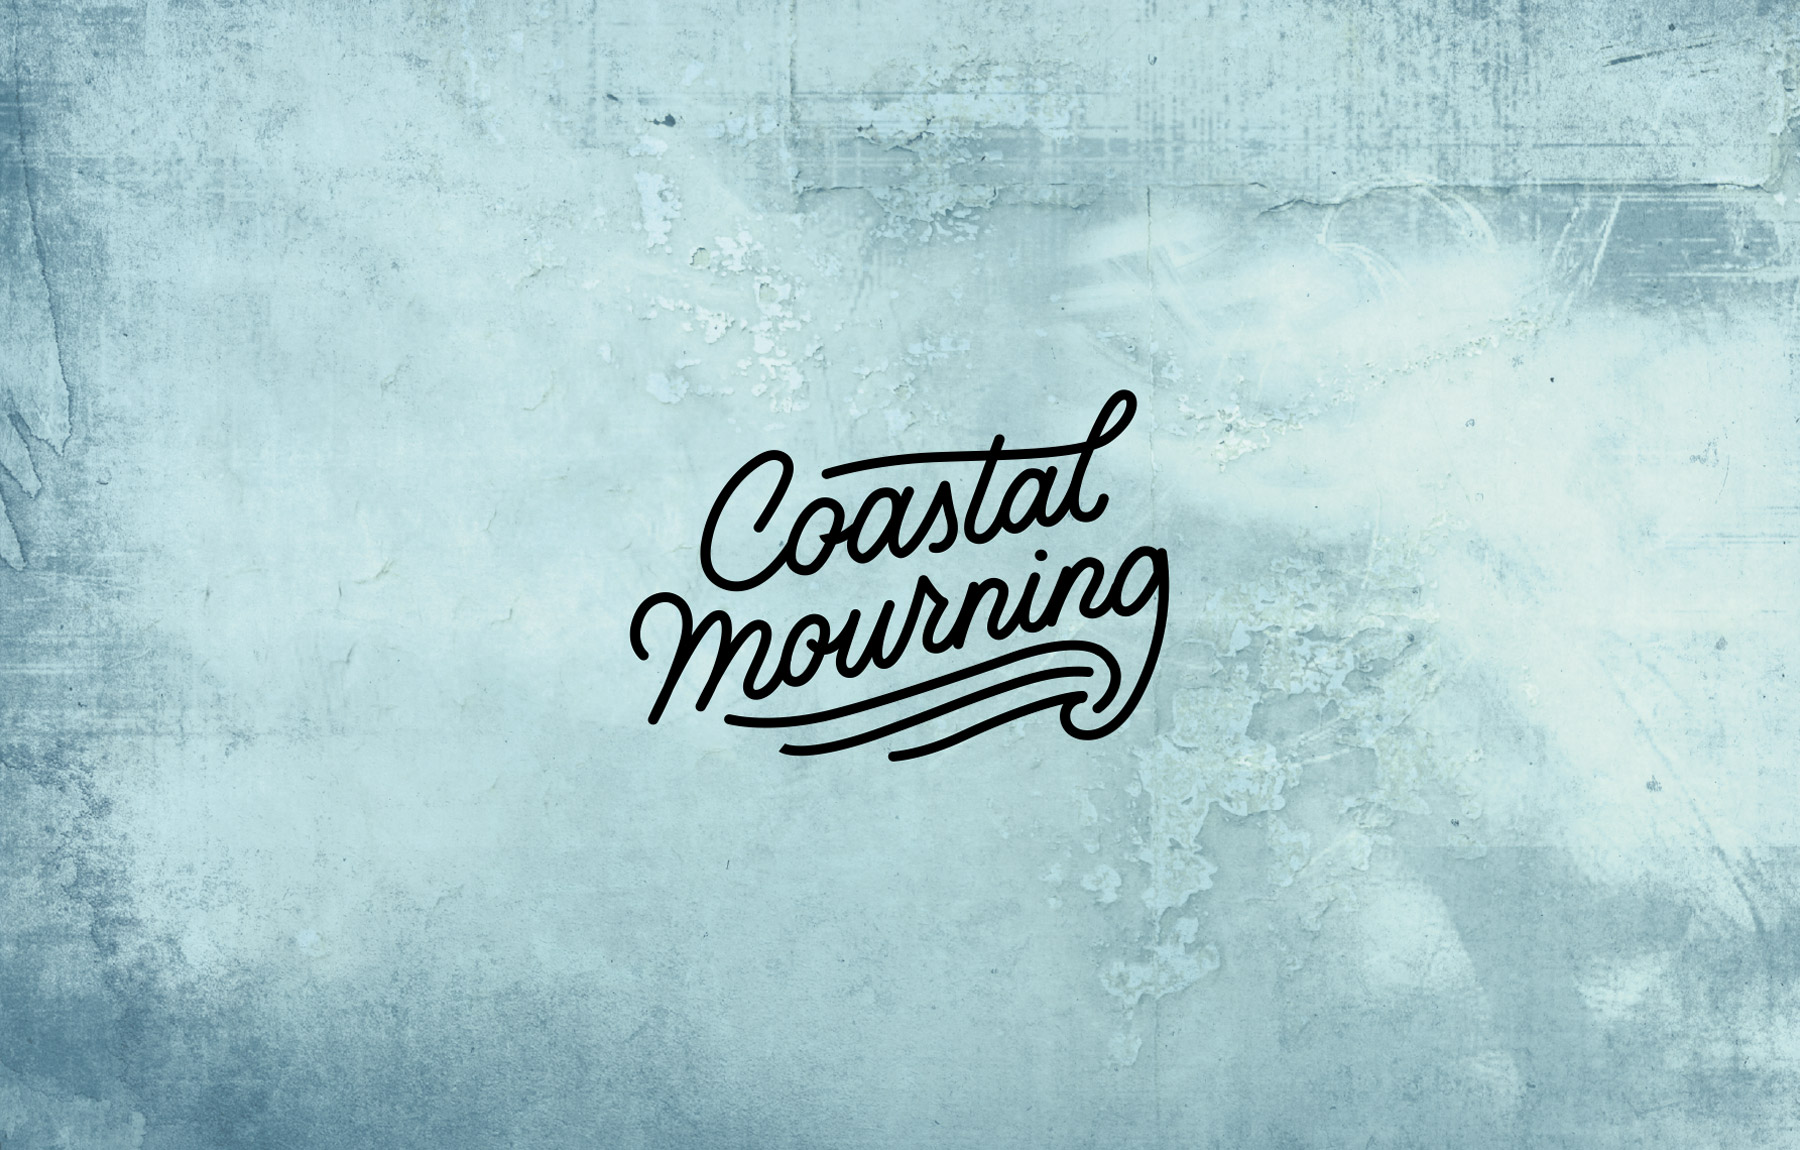 Logo Design for Coastal Mourning